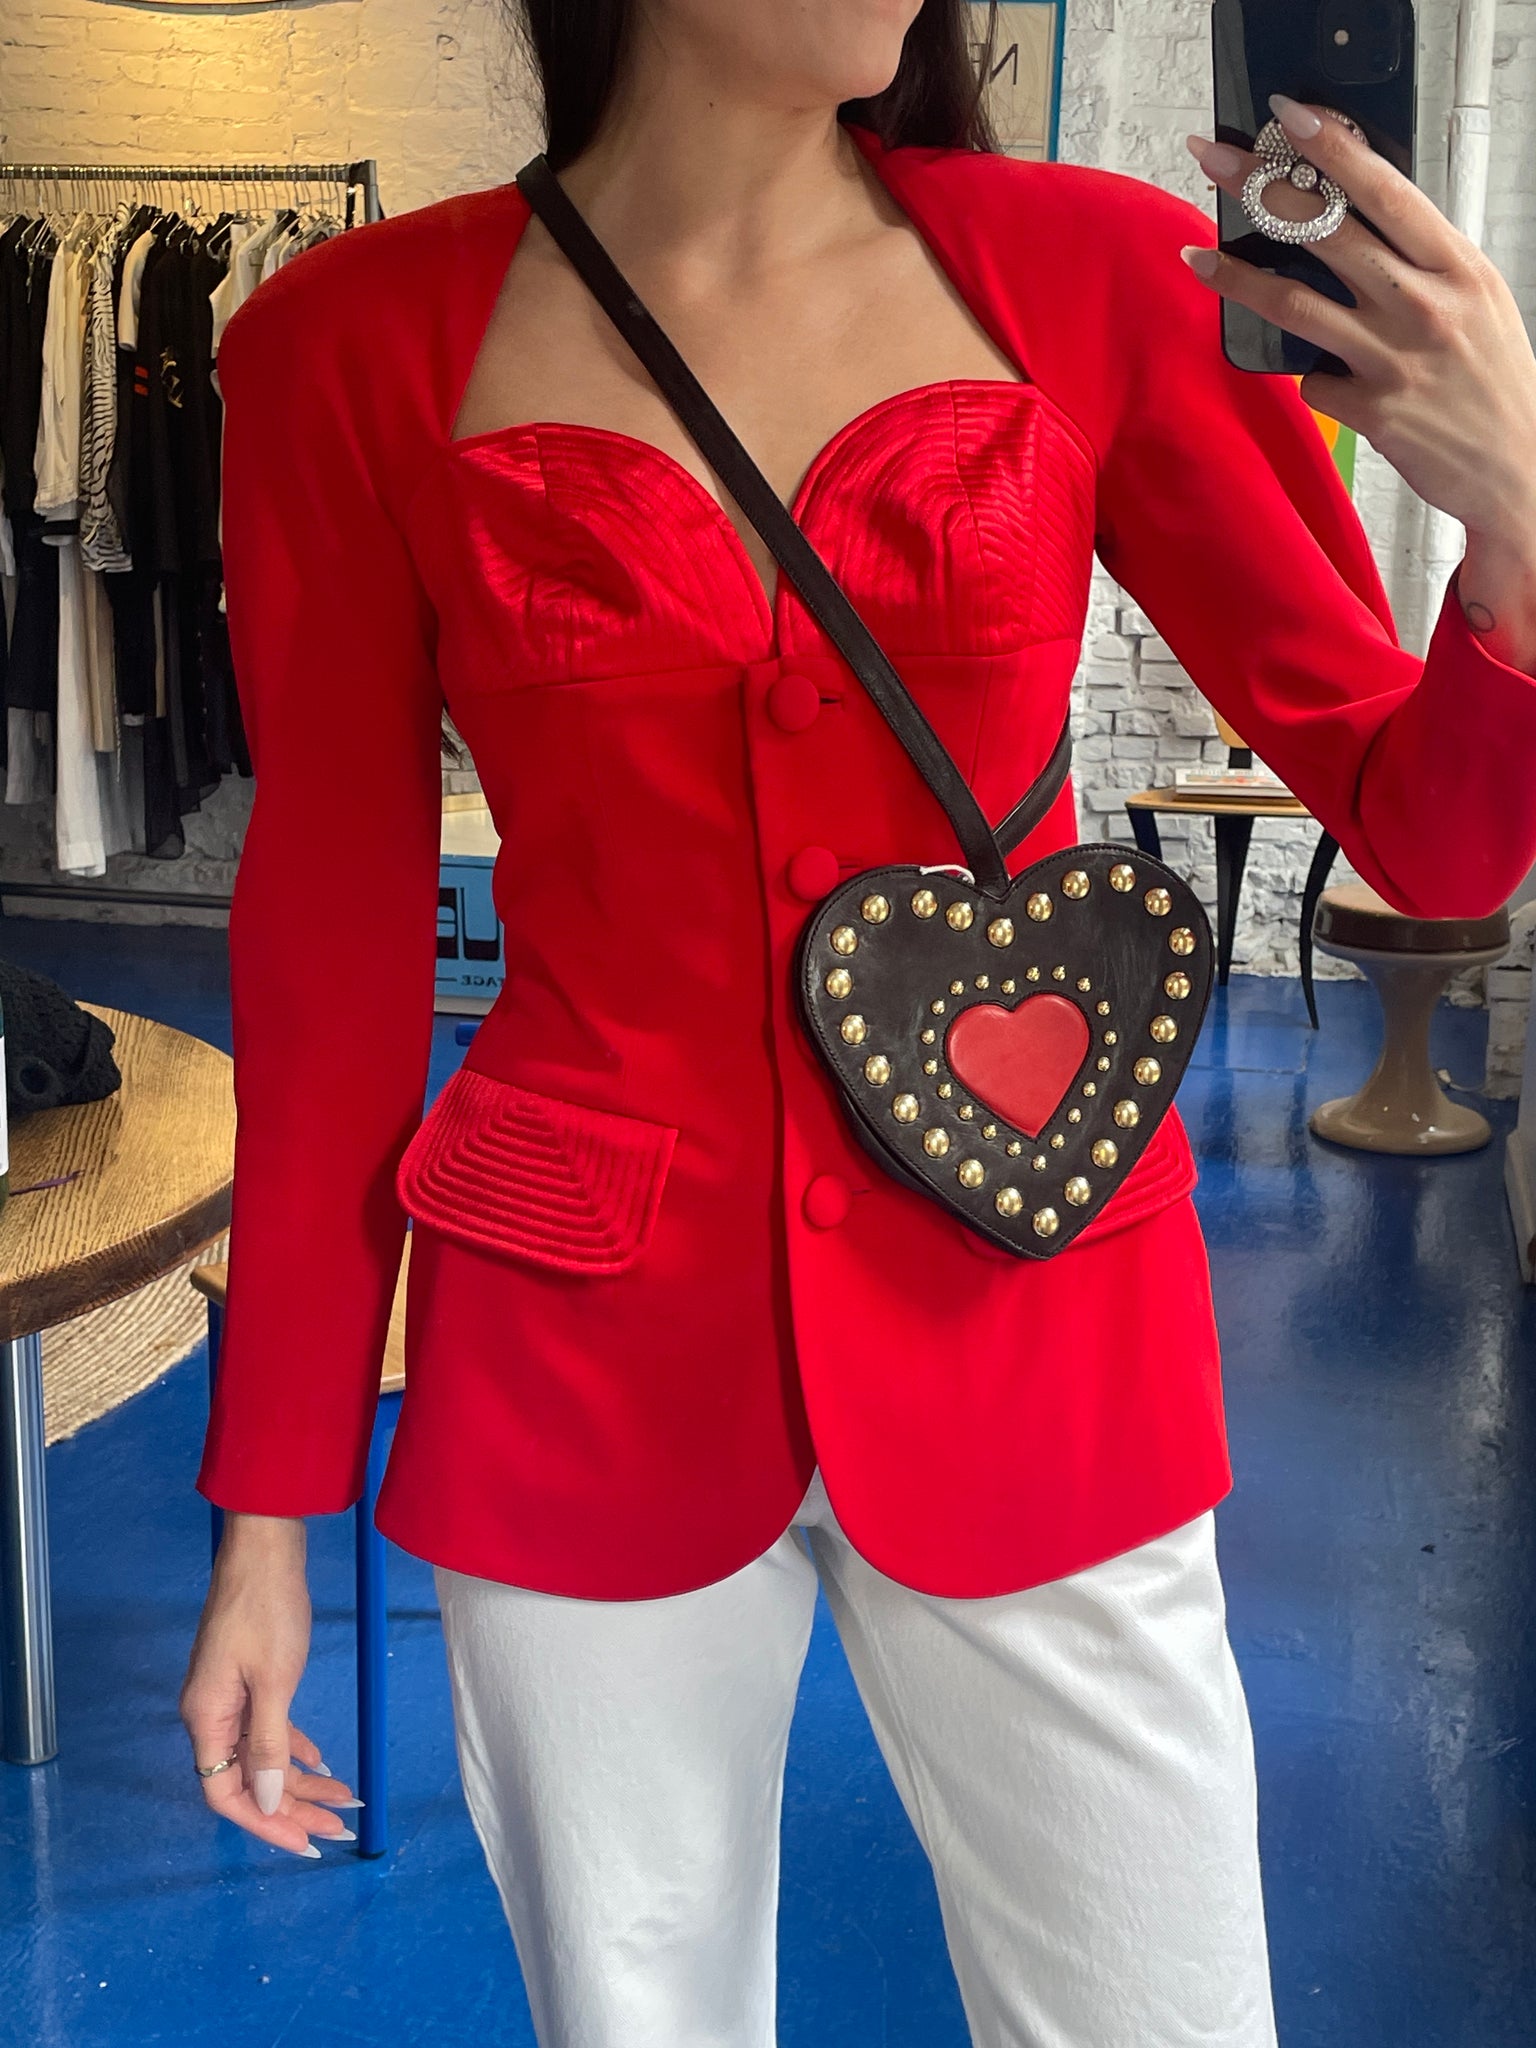 90s Moschino studded heart bag